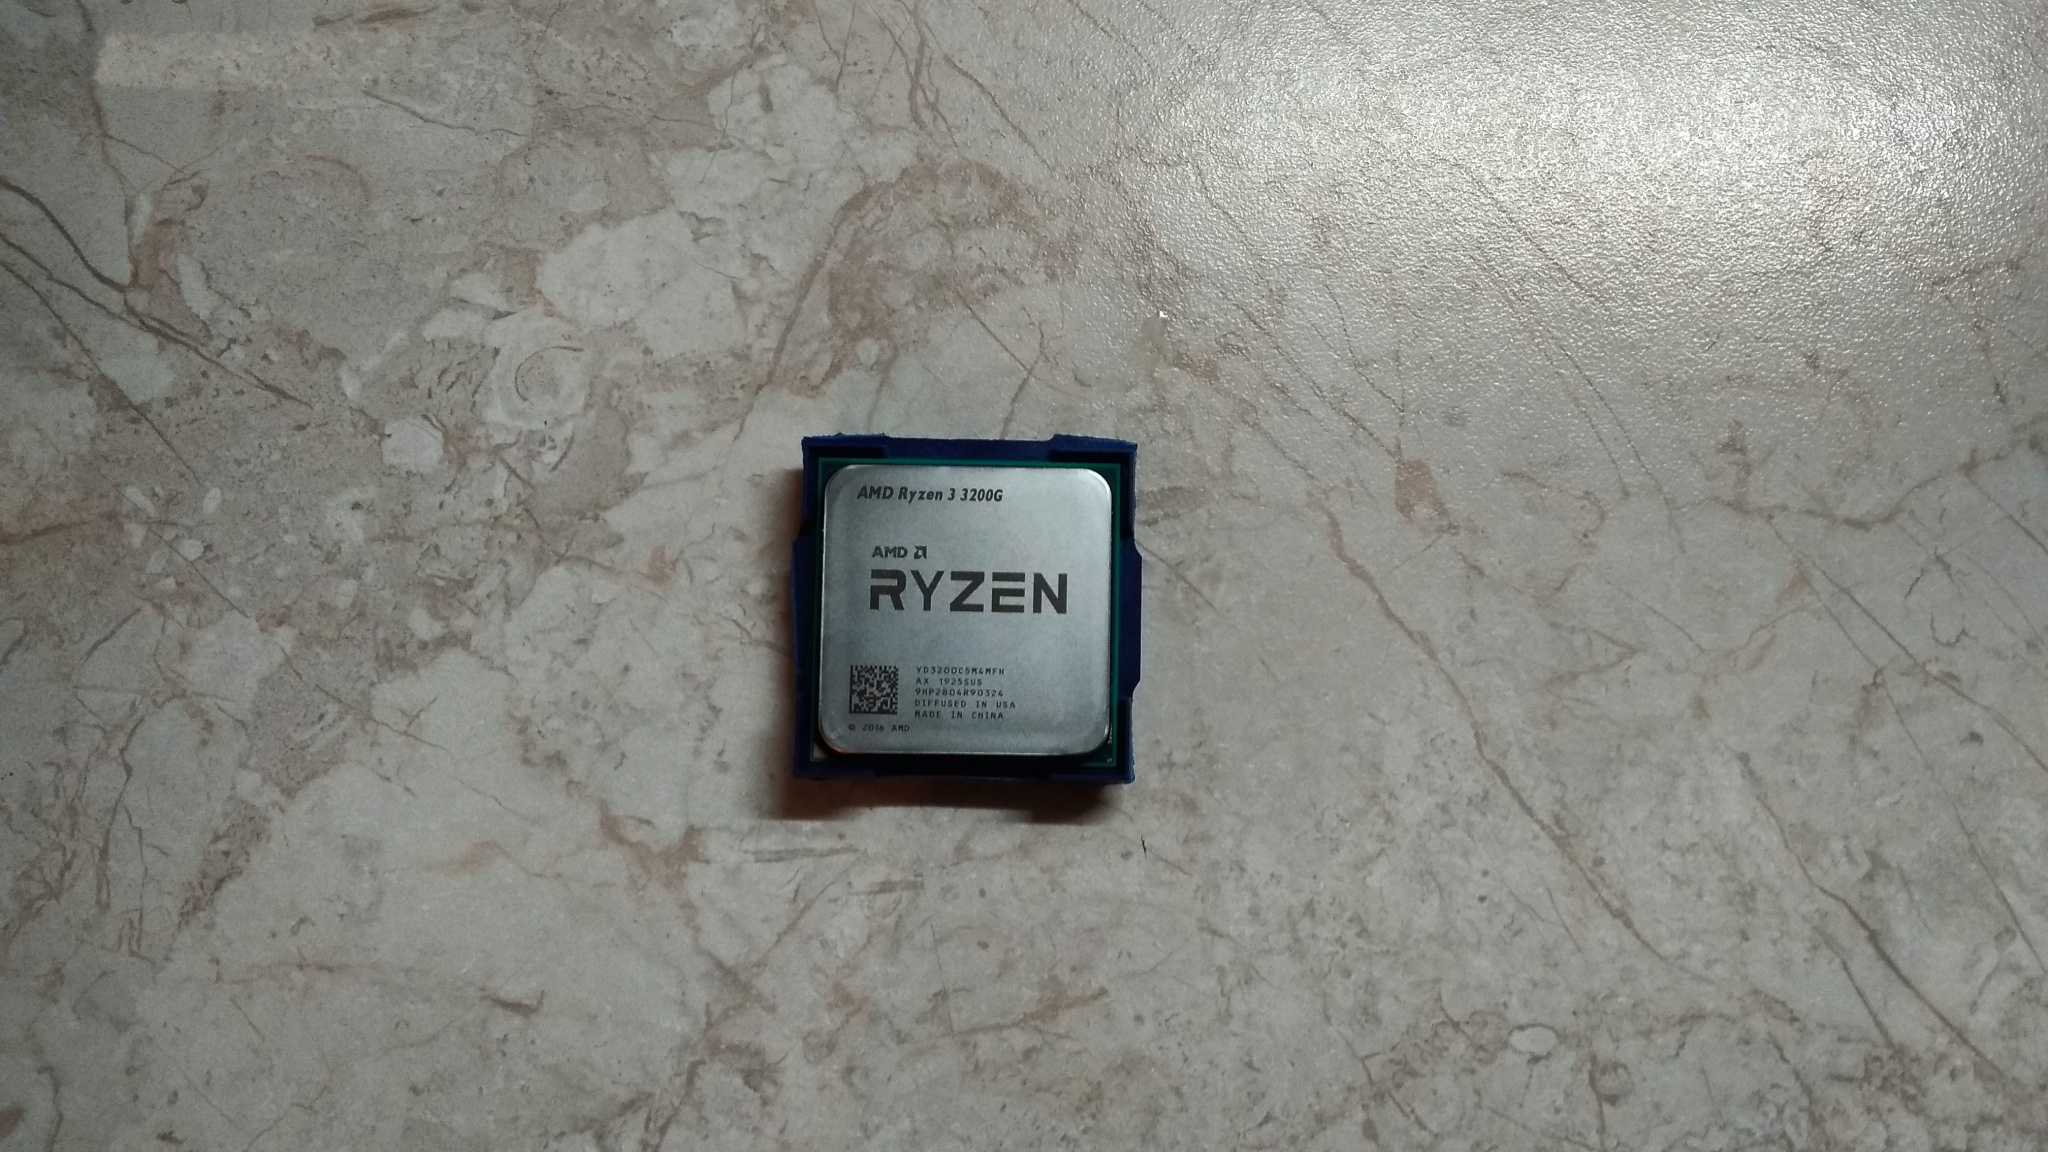 3 pro 3200g. Процессор AMD Ryzen 3 3200g. Процессор AMD Ryzen 3 3200g am4. AMD Ryzen 3 Pro 3200g. AMD Risen 3 3200g.